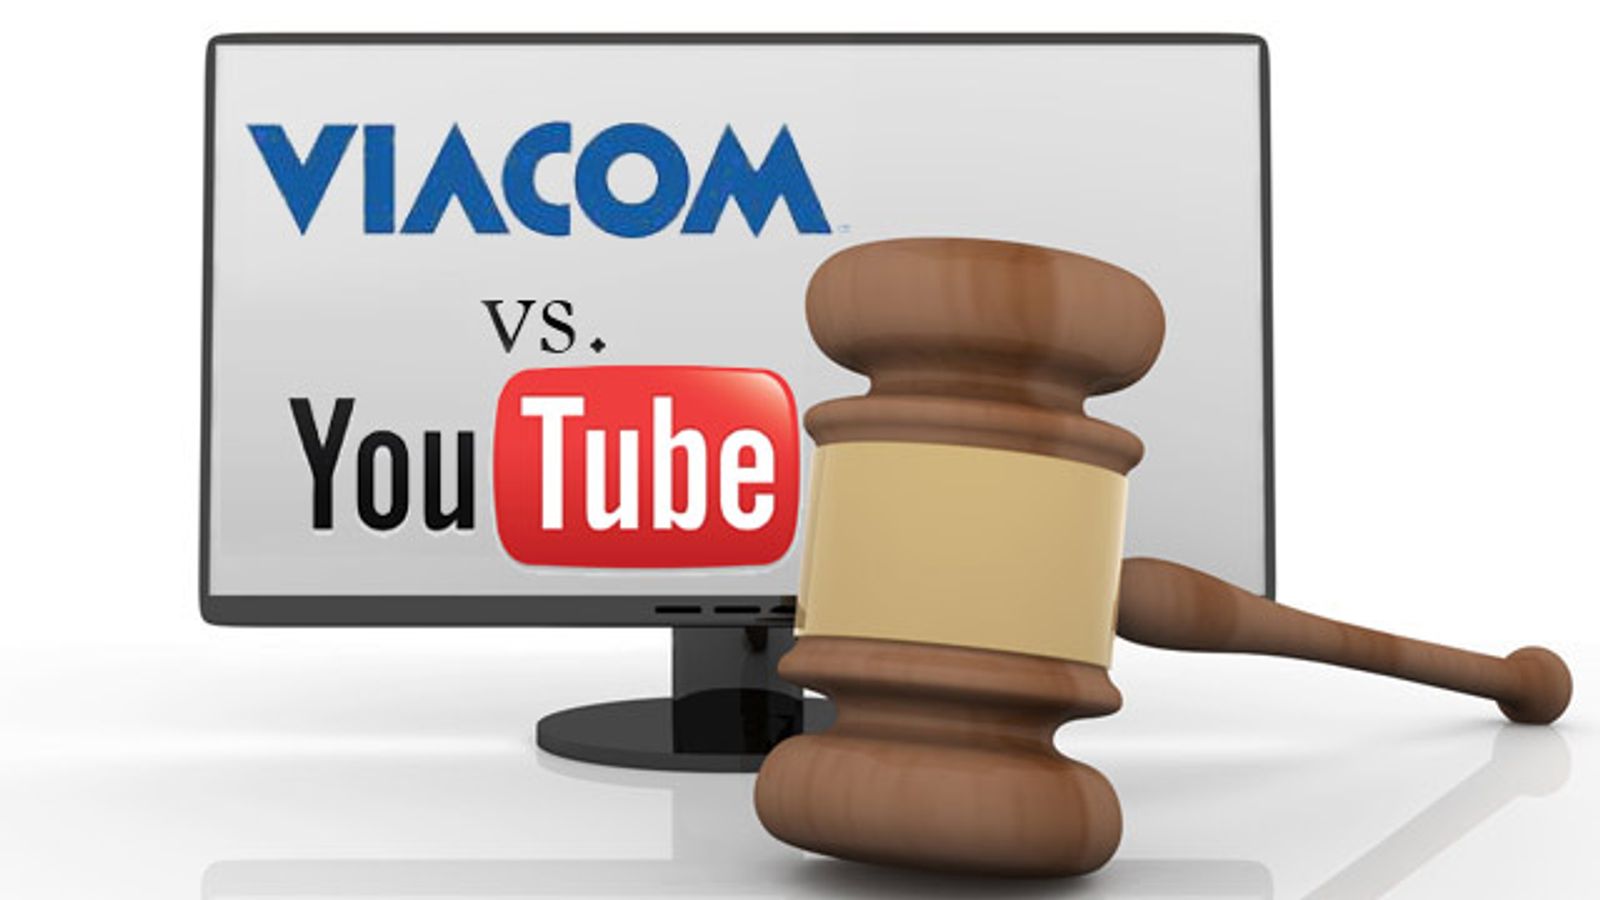 Court Smacks Down Viacom in Copyright Claim Against YouTube